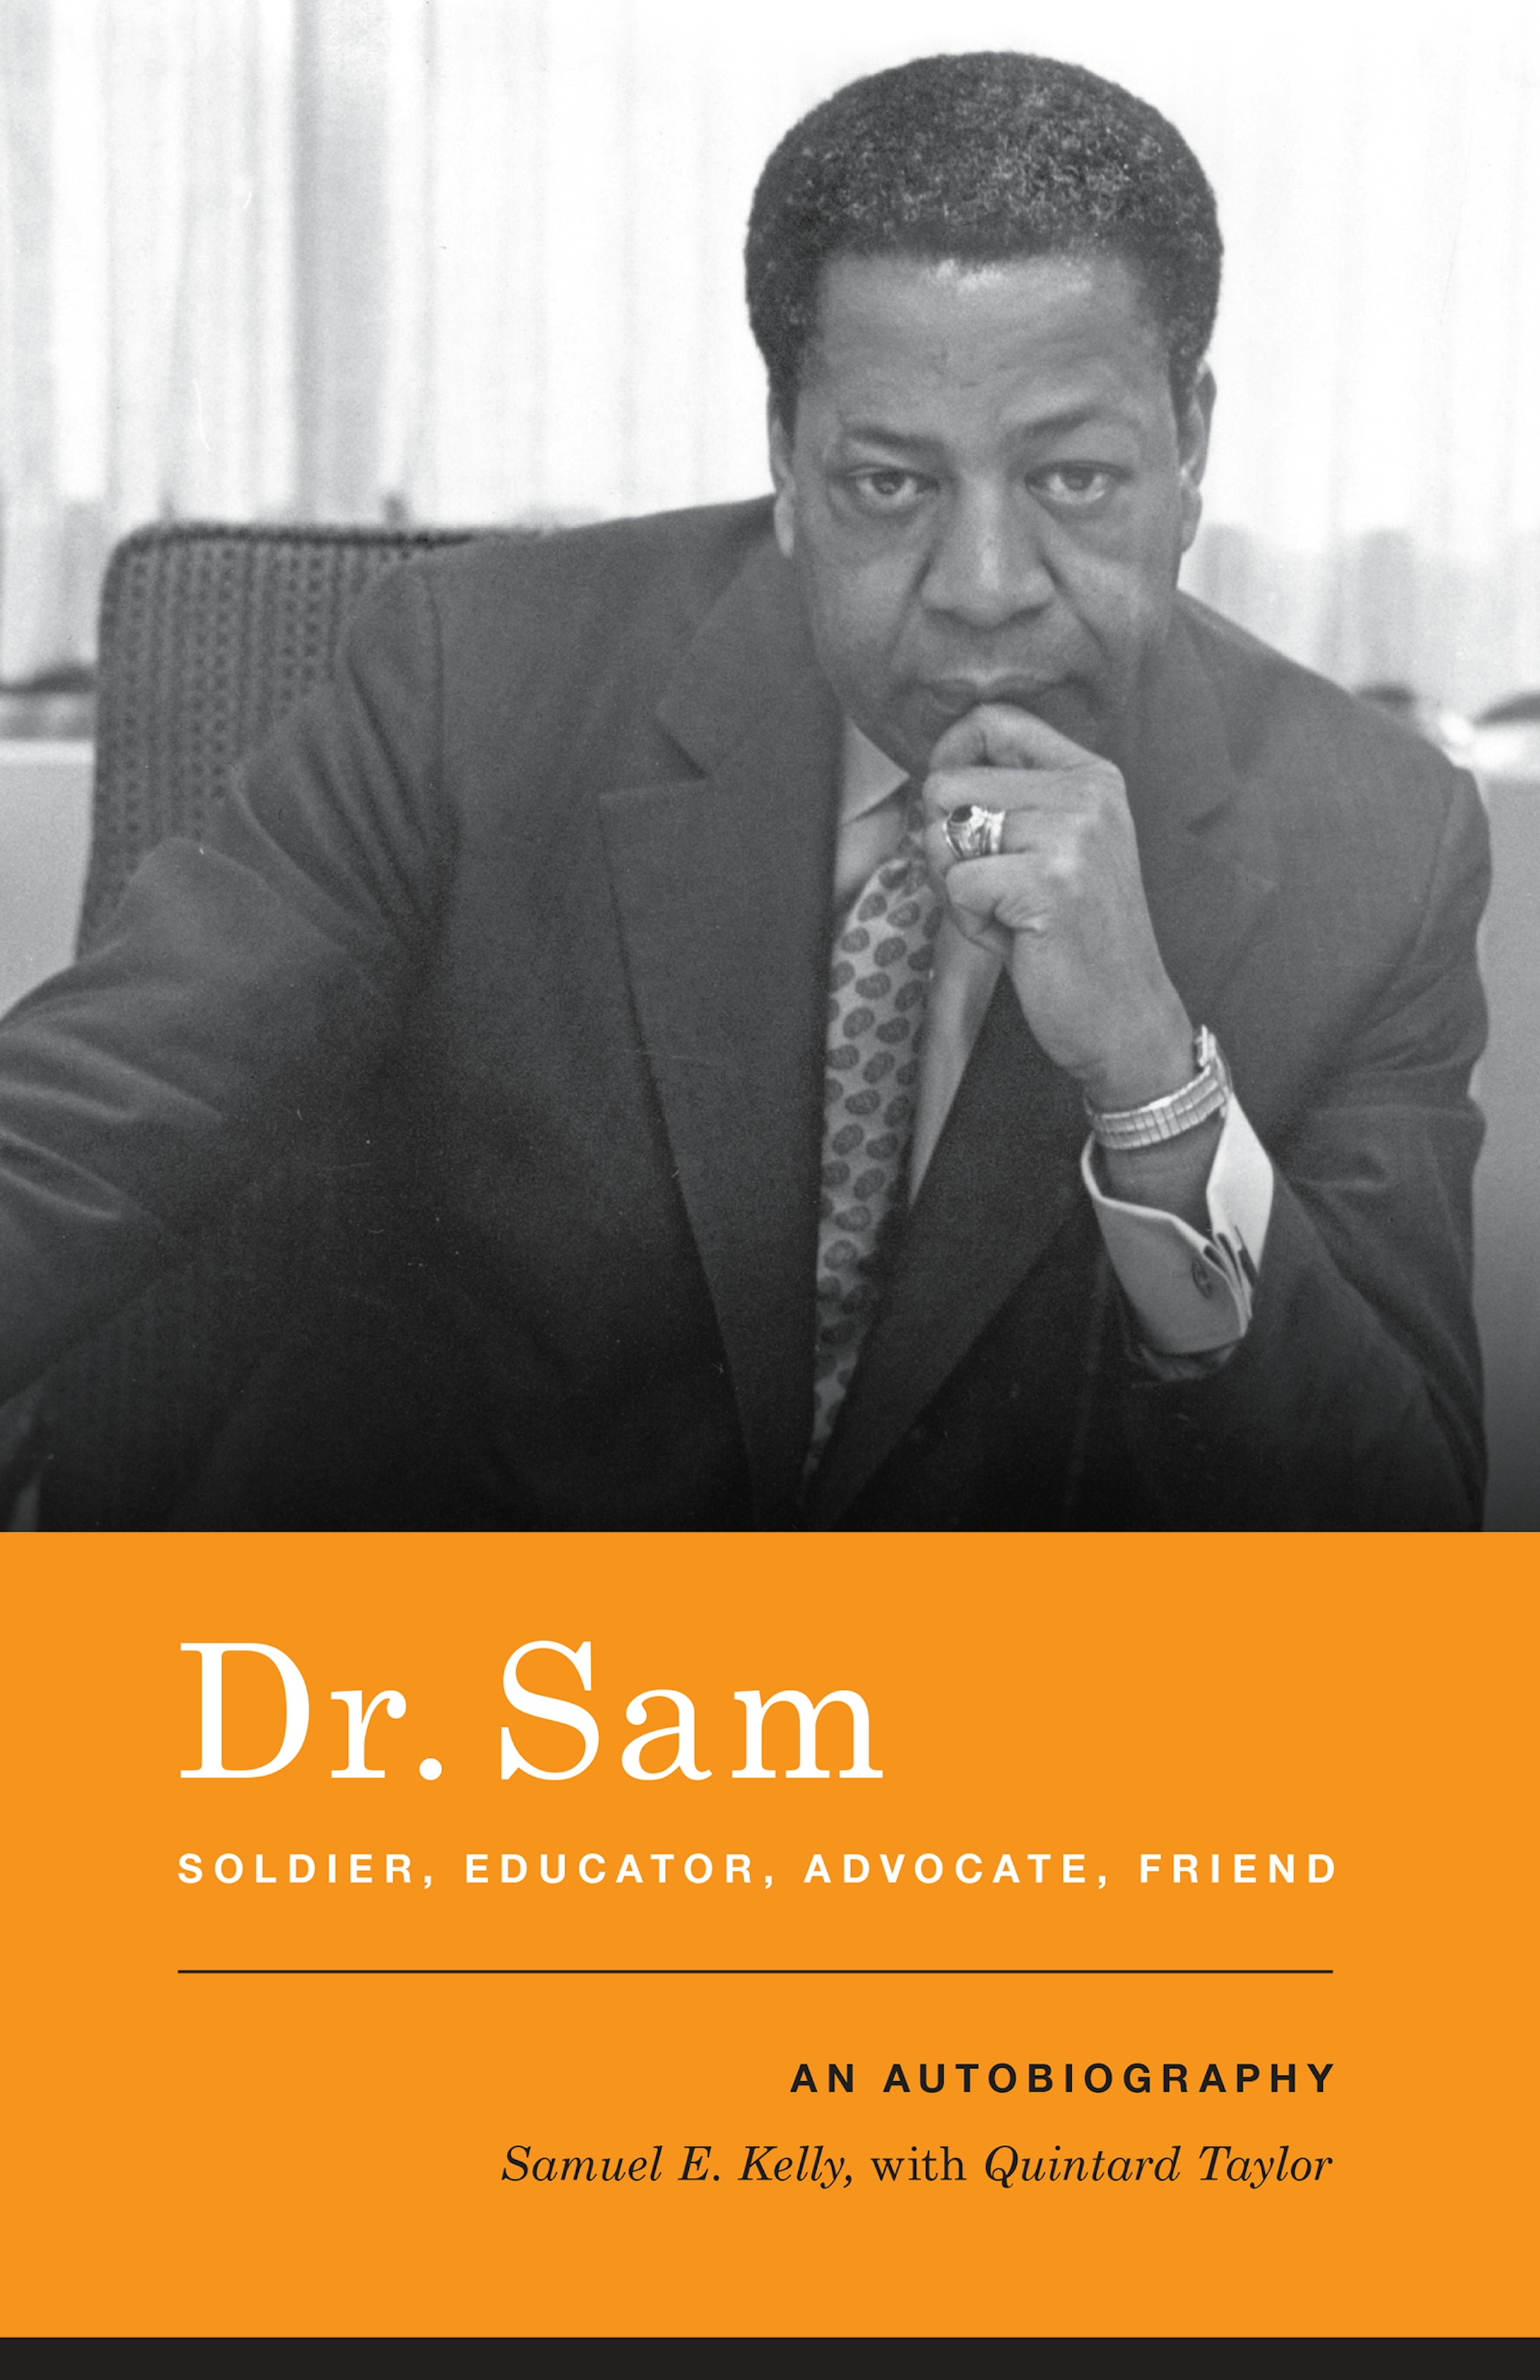 Dr. Sam, Soldier, Educator, Advocate, Friend